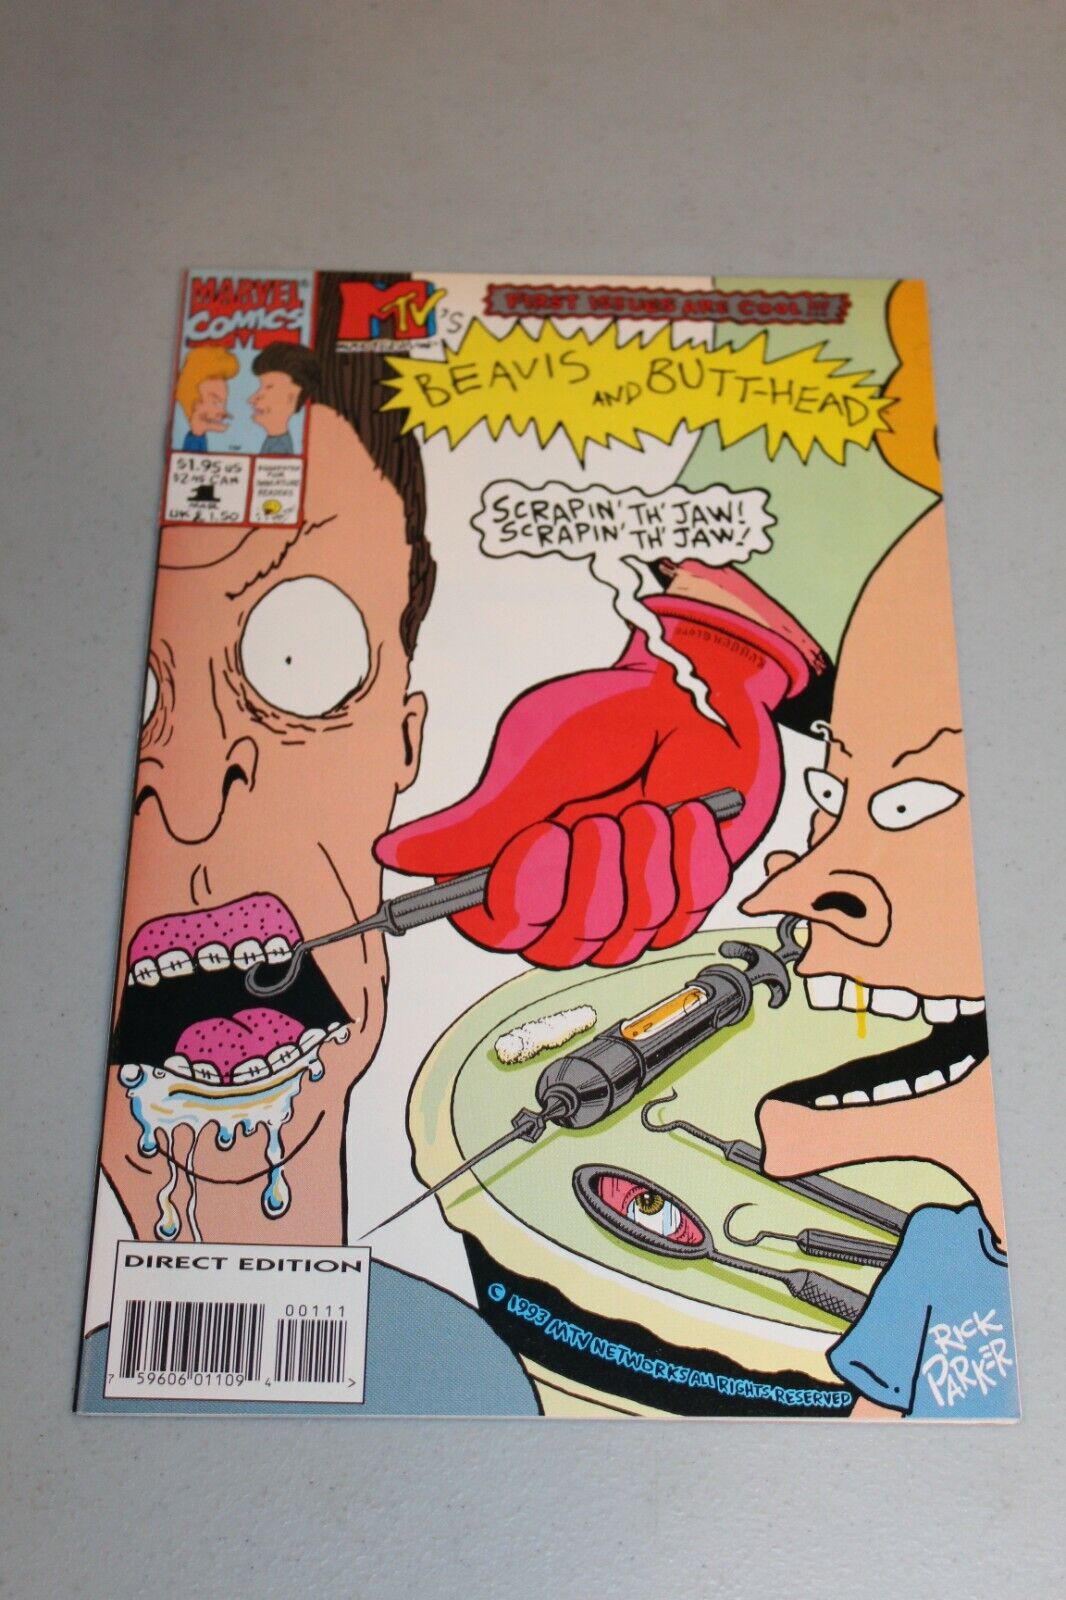 BEAVIS AND BUTT-HEAD #1 1994 RED GLOVE ERROR COVER 2ND PRINTING HTF SCARCE RARE